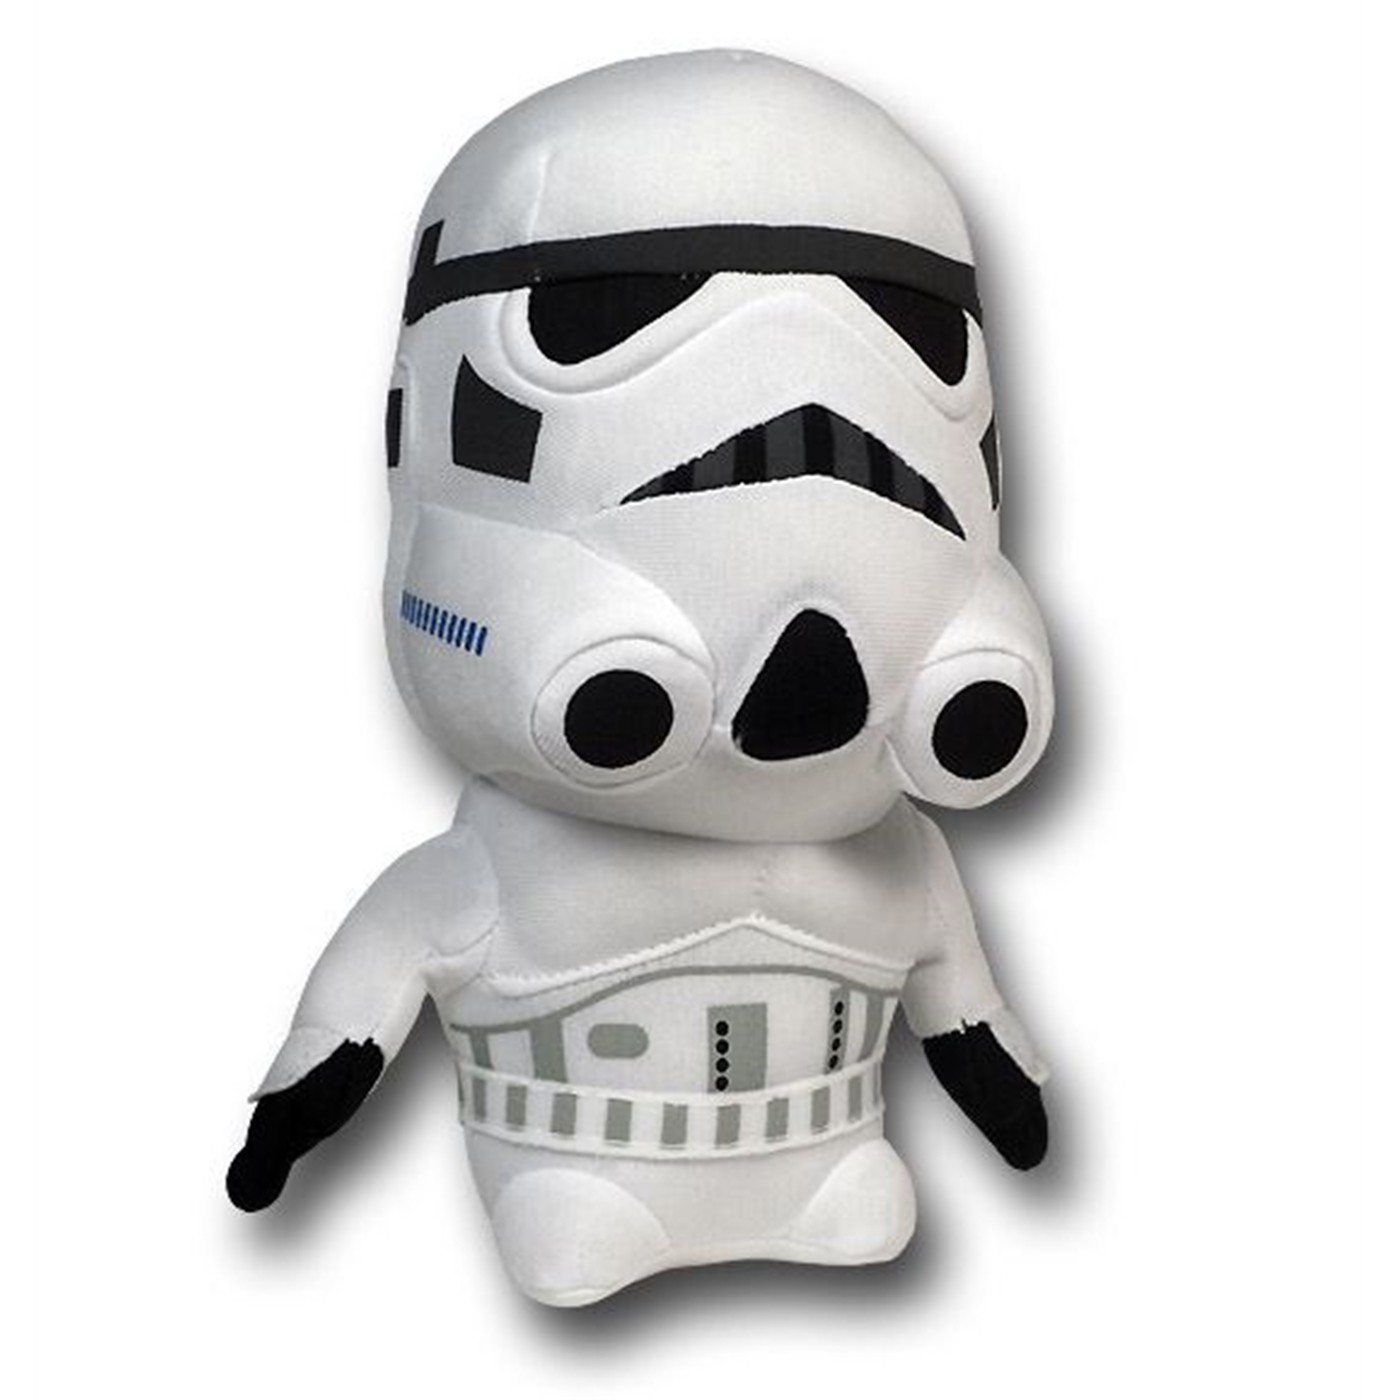 Star Wars Stormtrooper Super Deformed Plush Toy